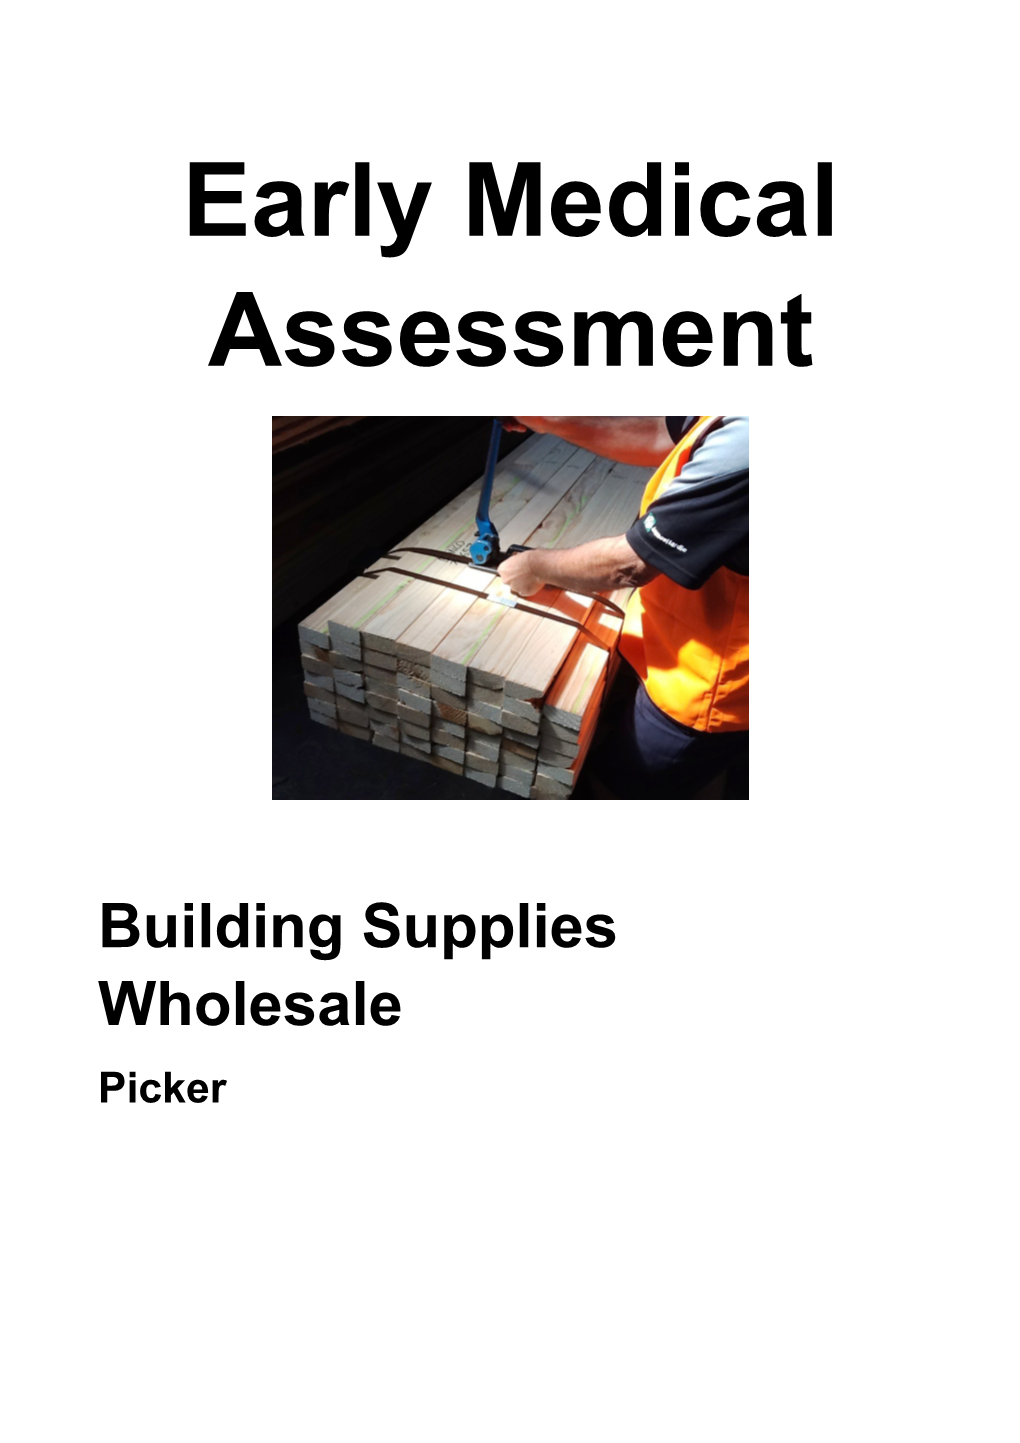 Building Supplies Wholesale - Picker Packer